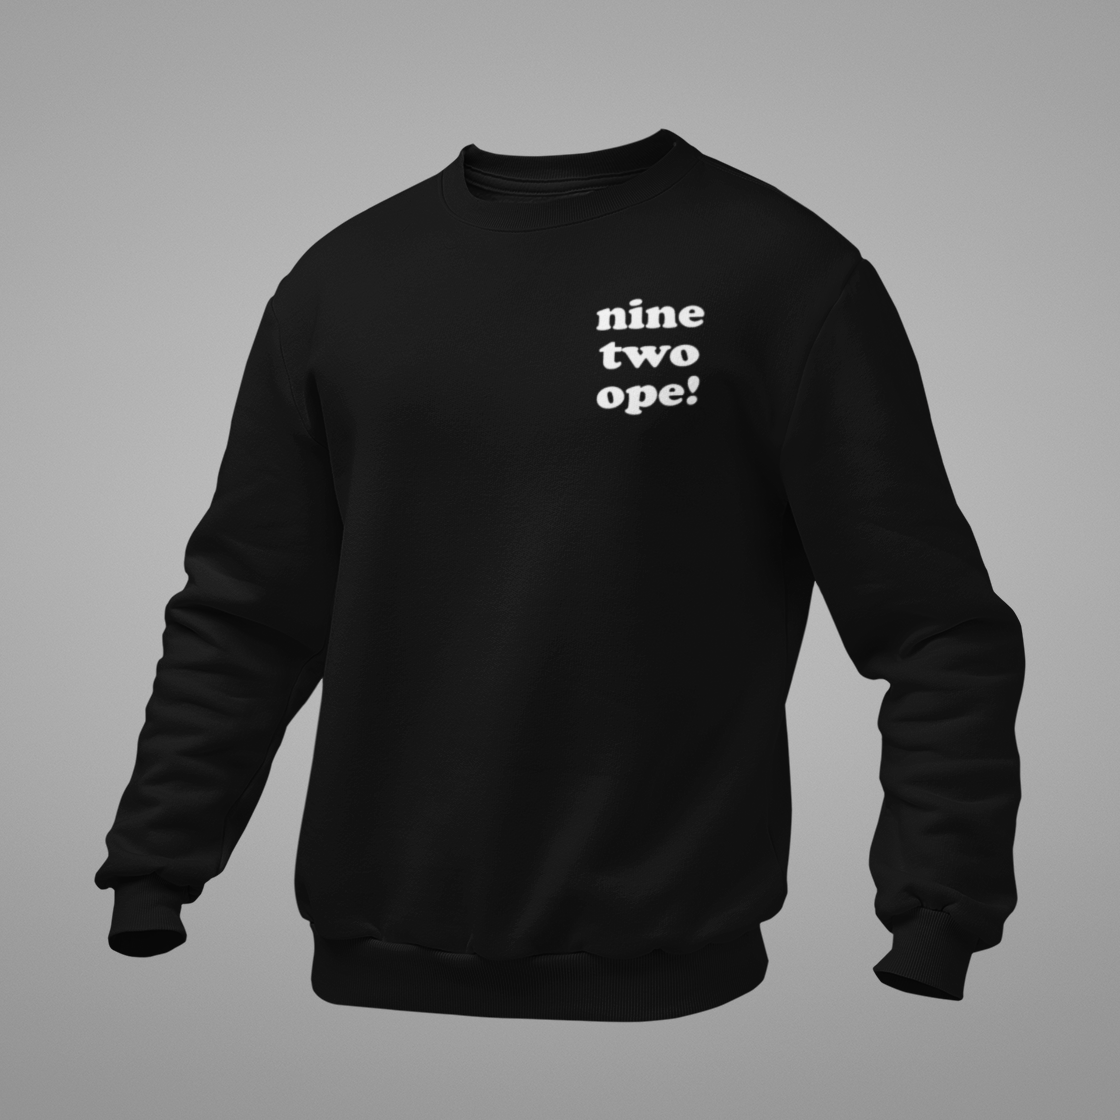 Black "nine two ope!" Area Code Crewneck Sweatshirt - 3D Puff Lettering